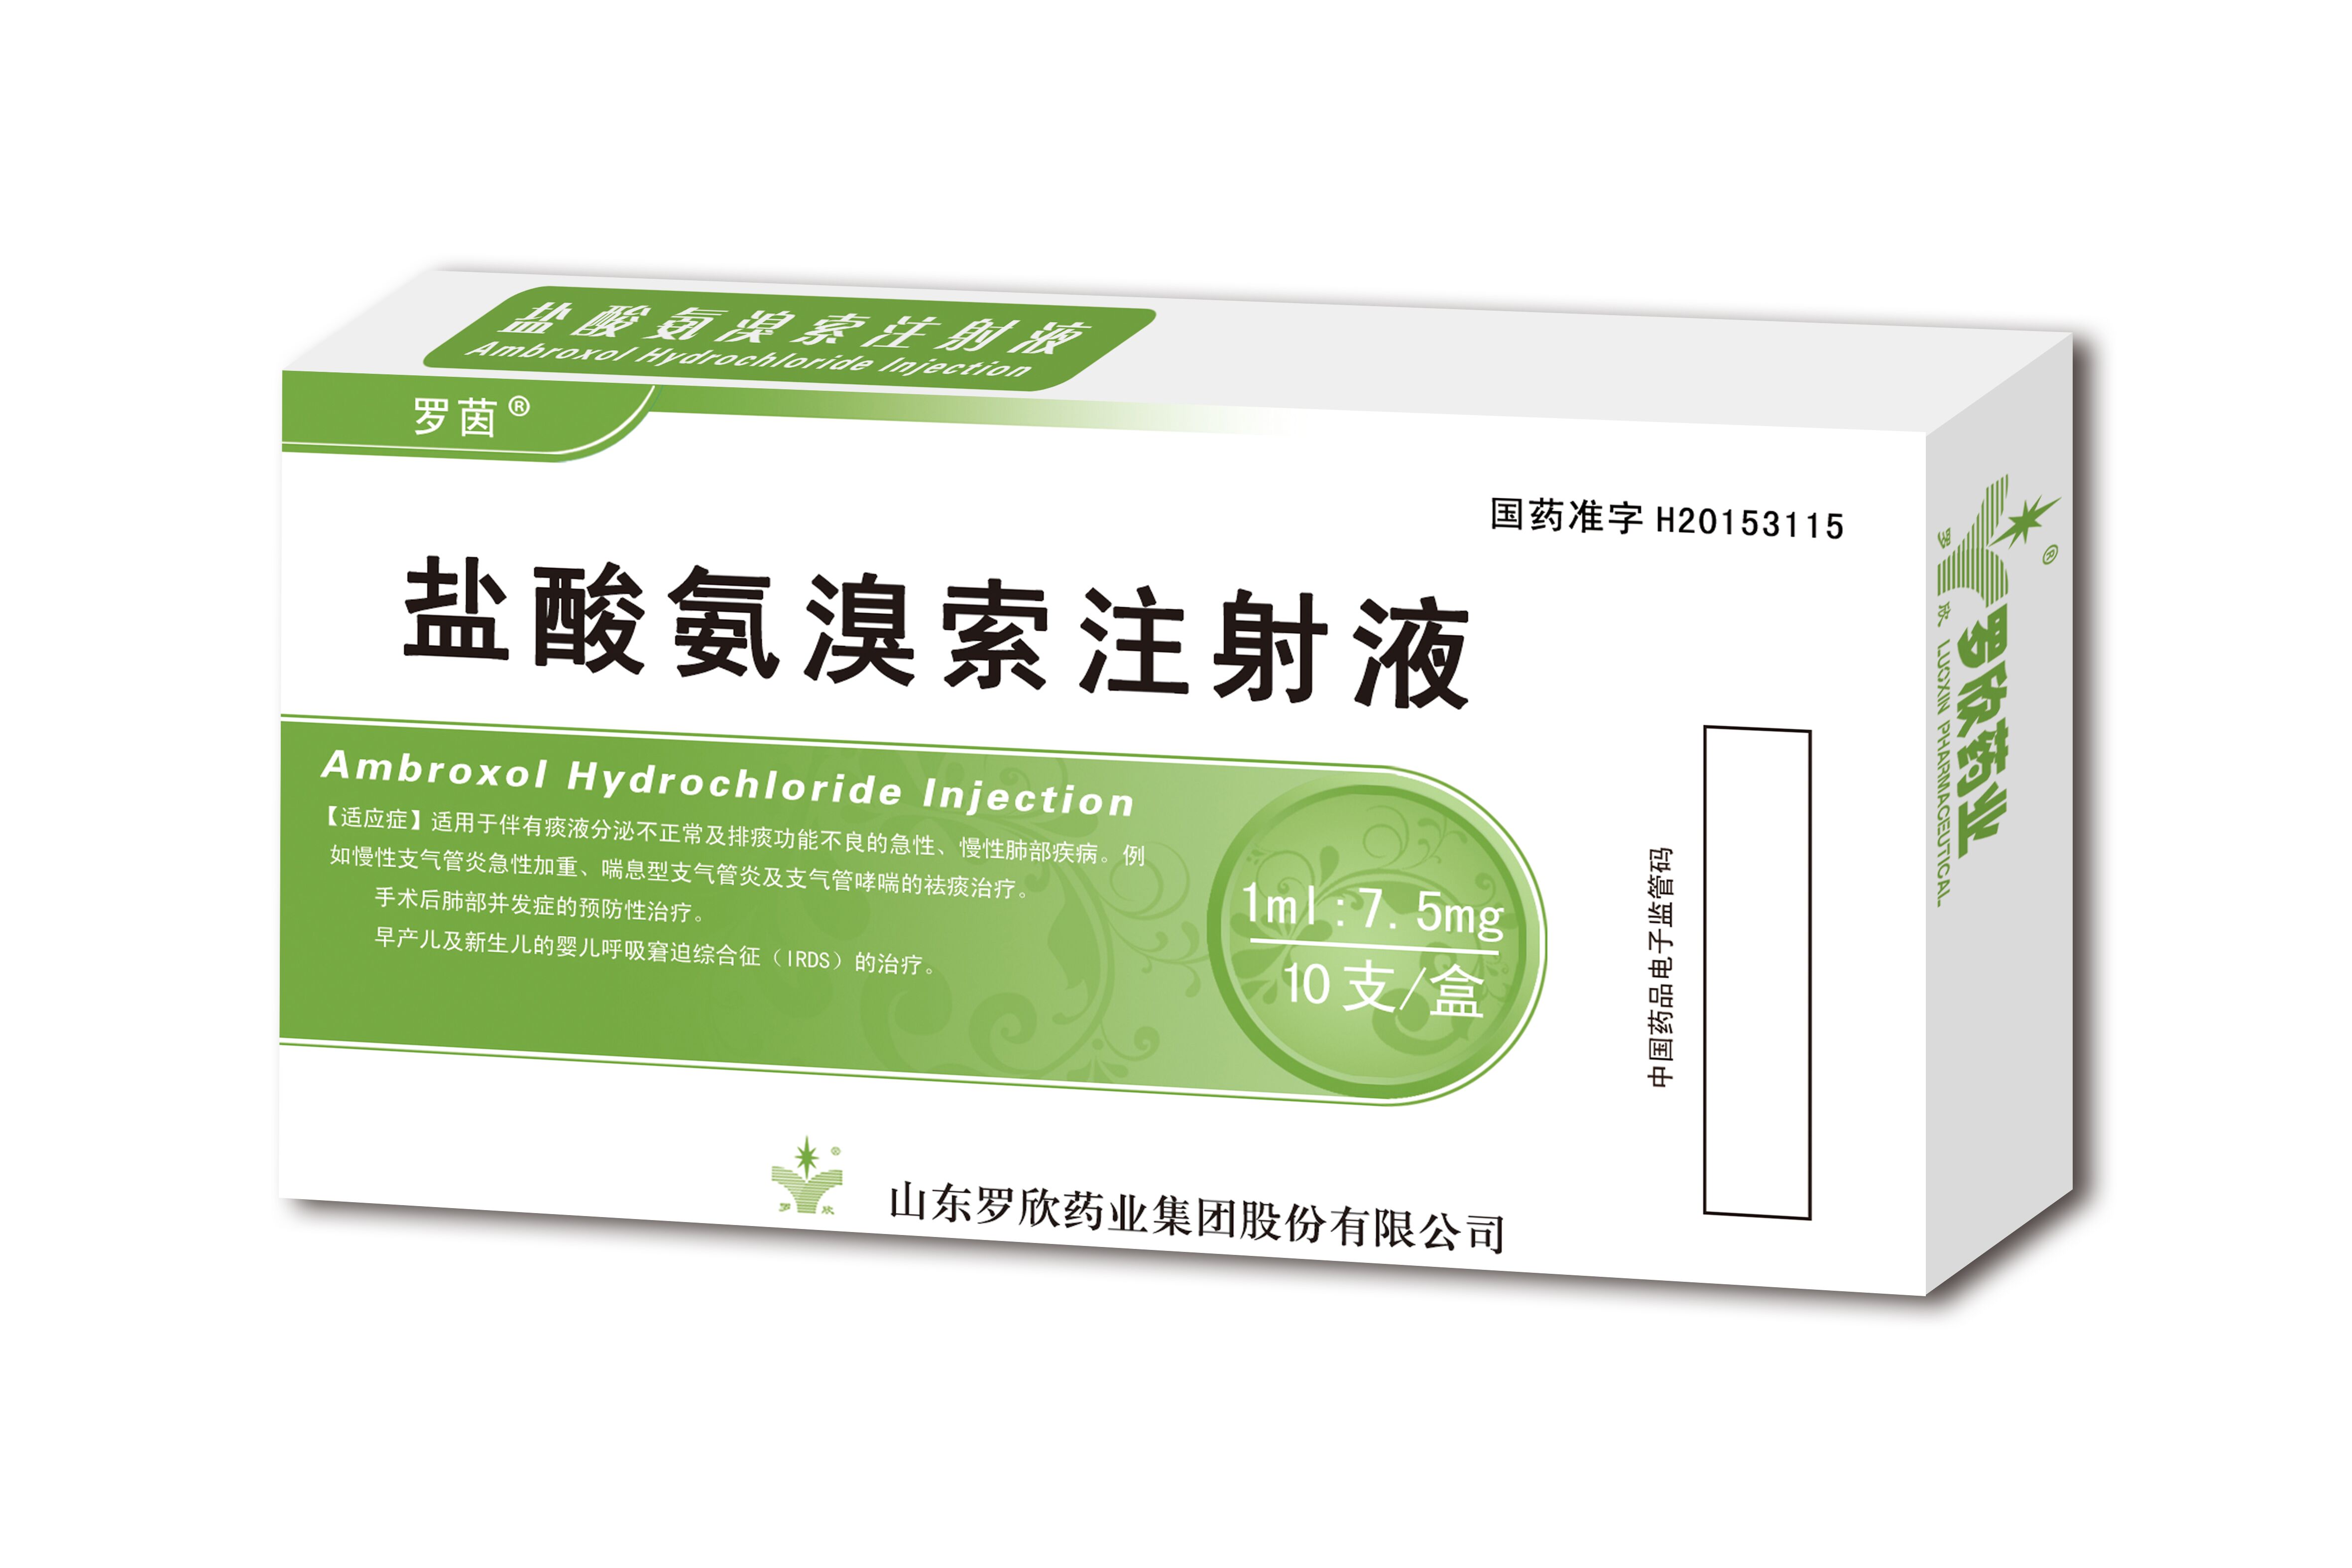 gentamycin sulfate injection ,Guizhou Tiandi Pharmaceutical Co., Ltd.